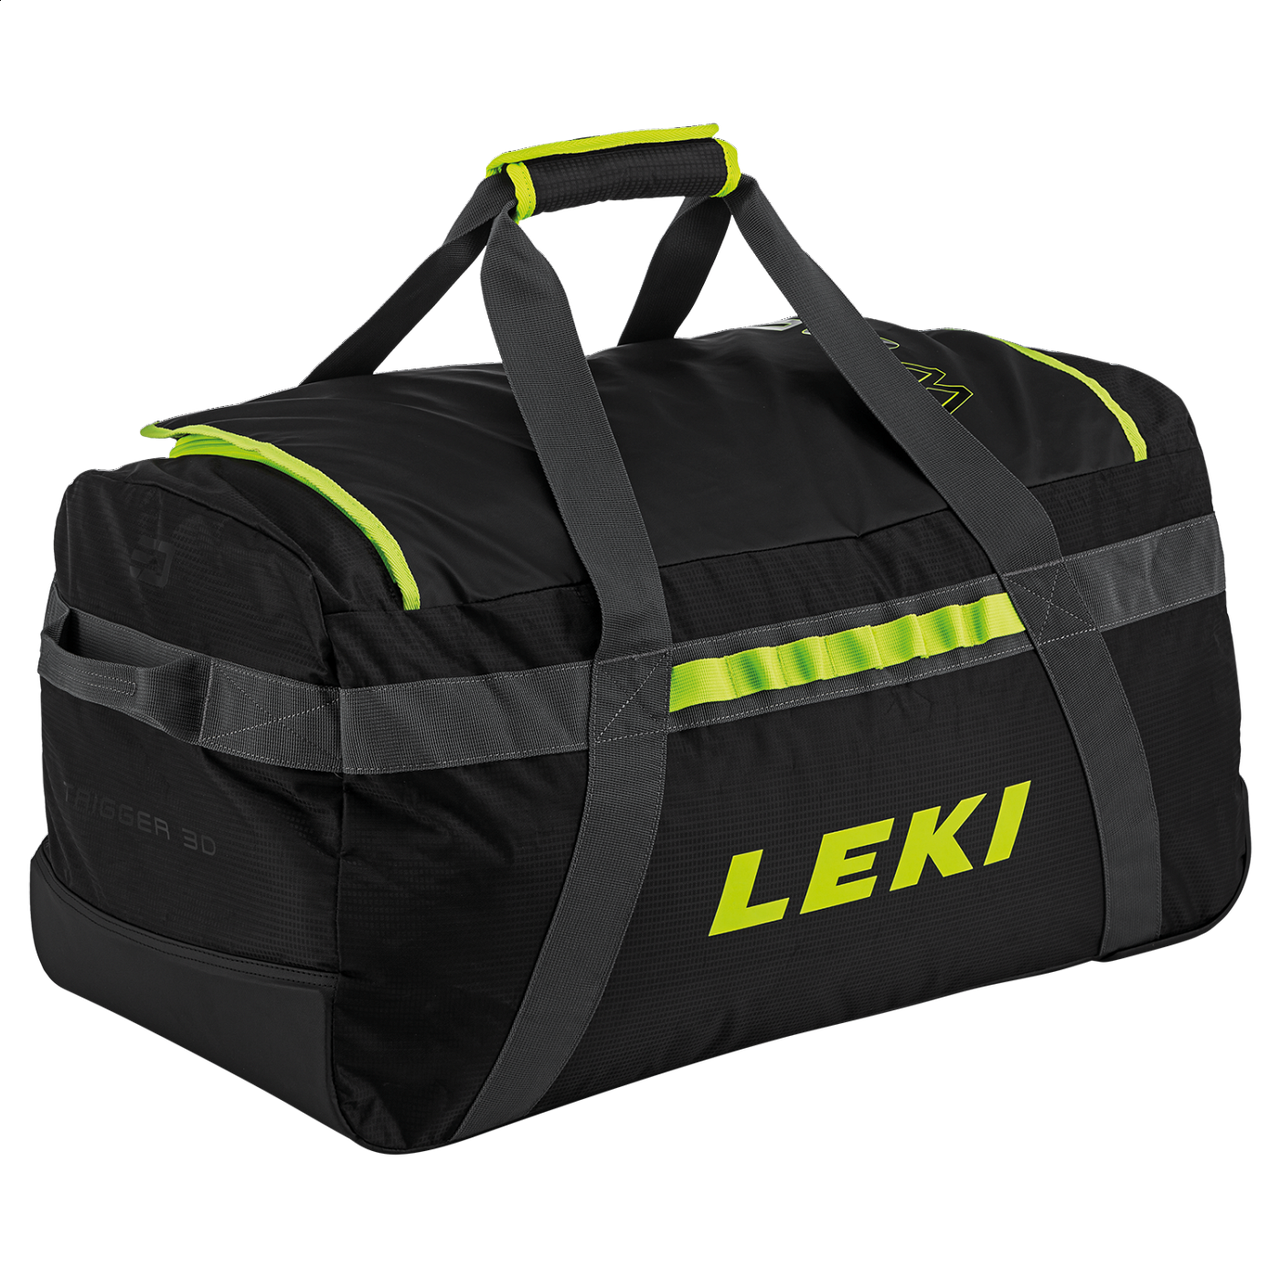 Сумка LEKI Travel Sports Bag WCR